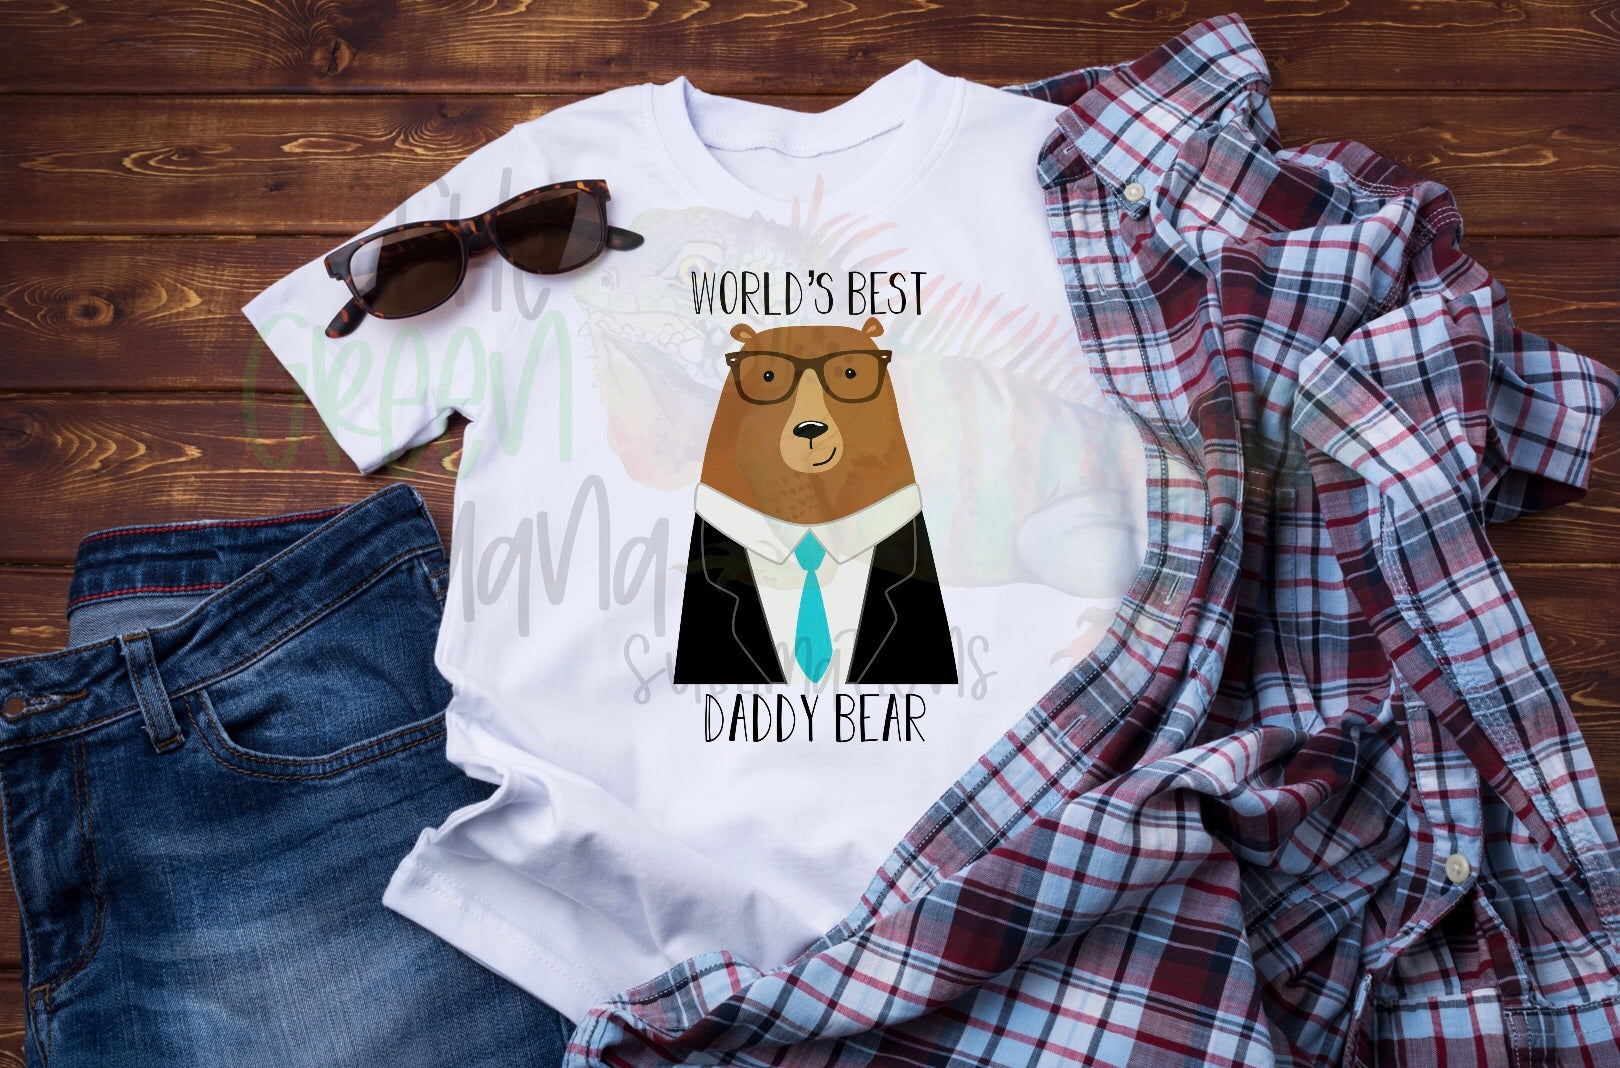 World’s best daddy bear